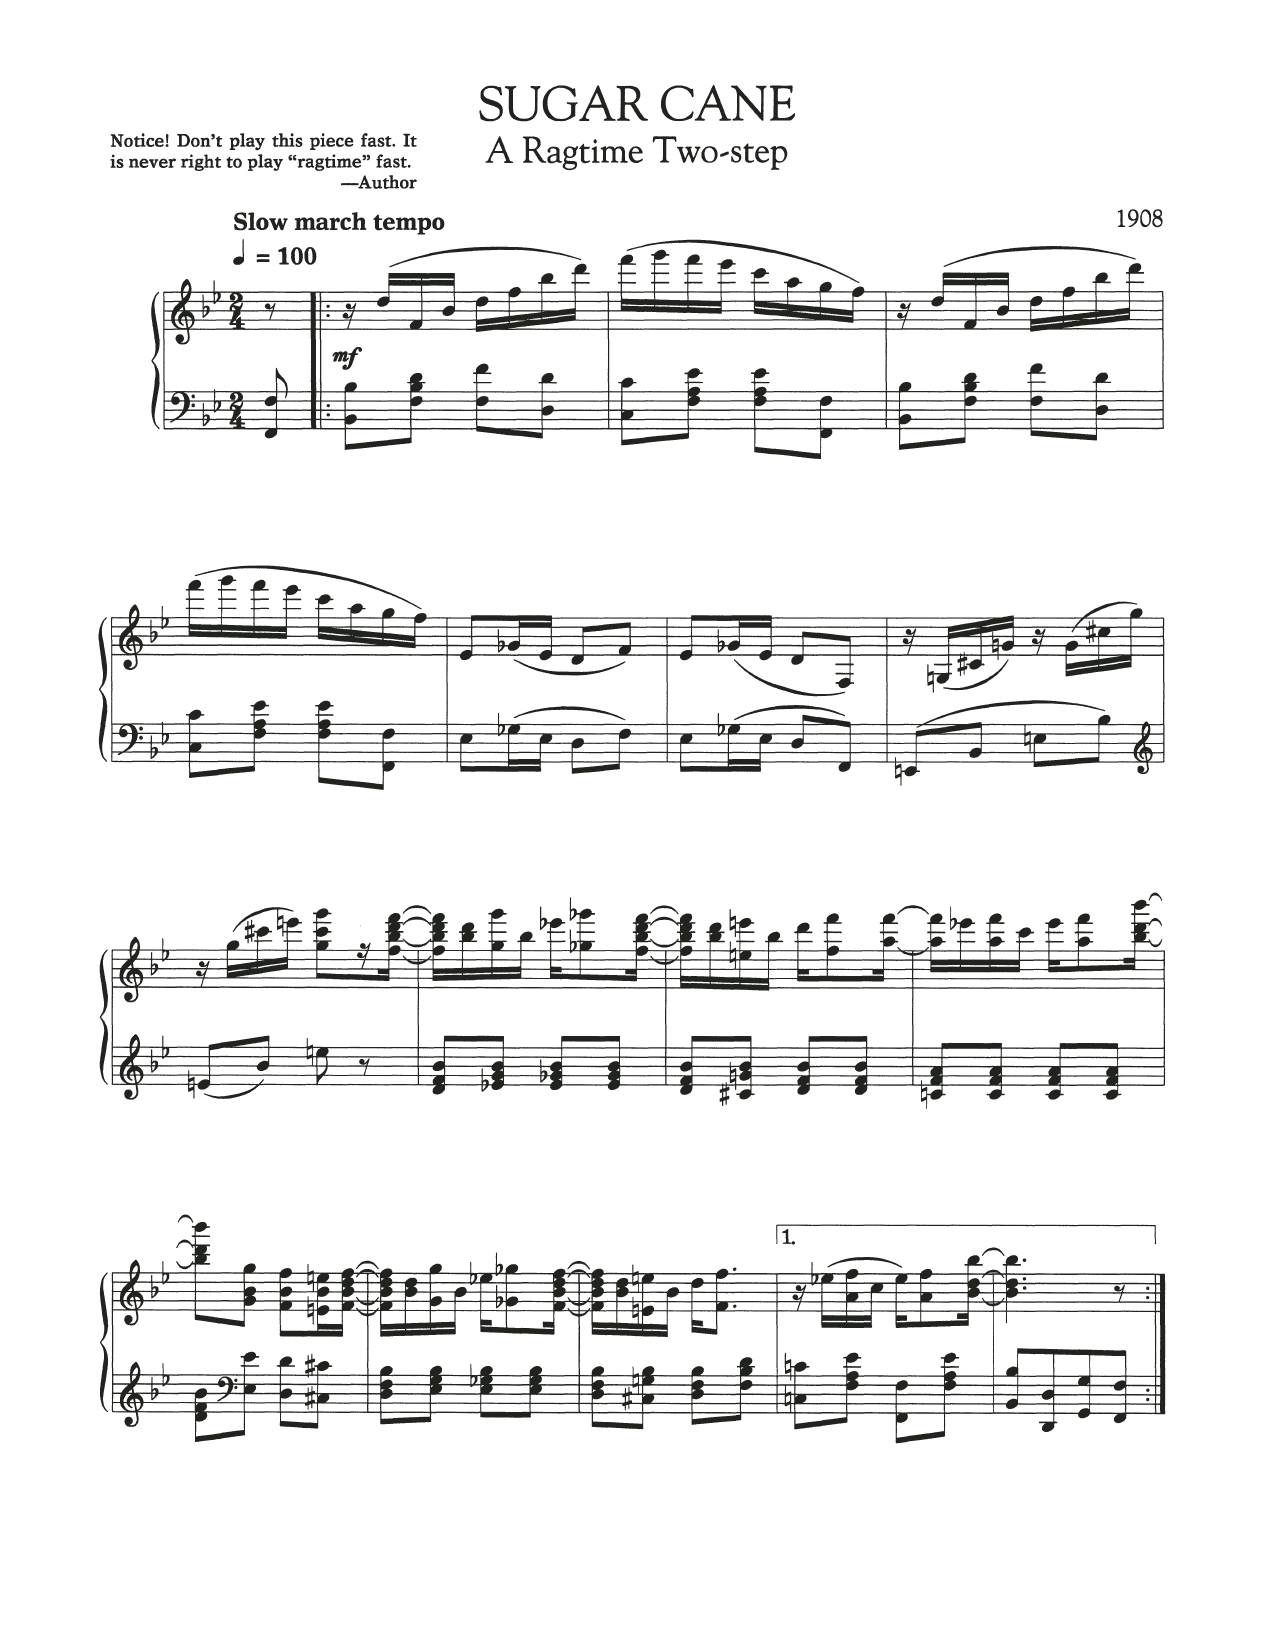 Scott Joplin Sugar Cane Rag Sheet Music Notes & Chords for Piano Solo - Download or Print PDF